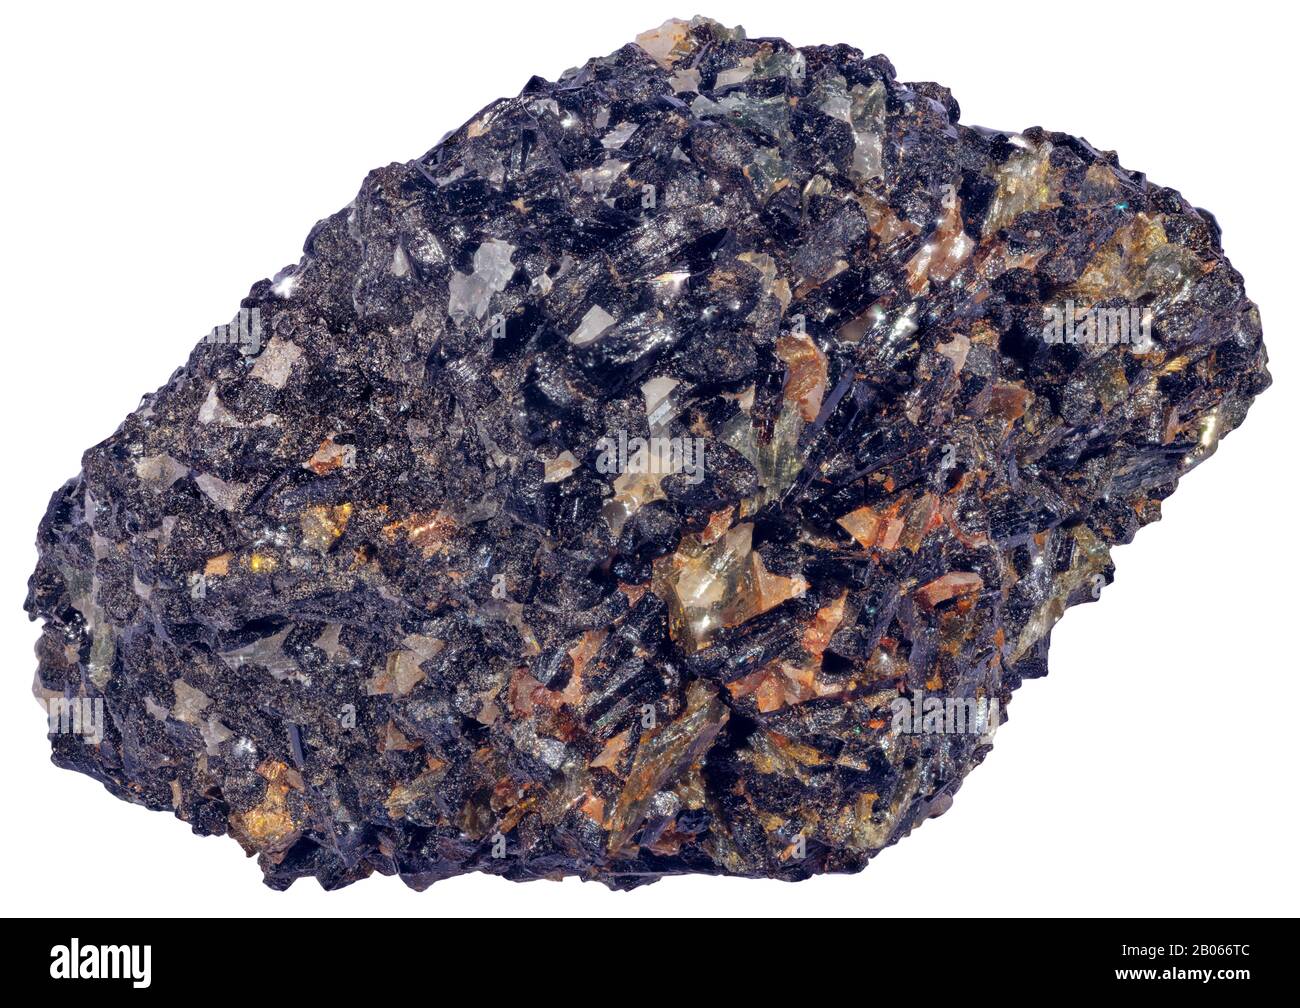 Danaite, Mado, Ontario, arsenopirita cobaltiferous una variedad de arsenopirita con cobalto. Foto de stock